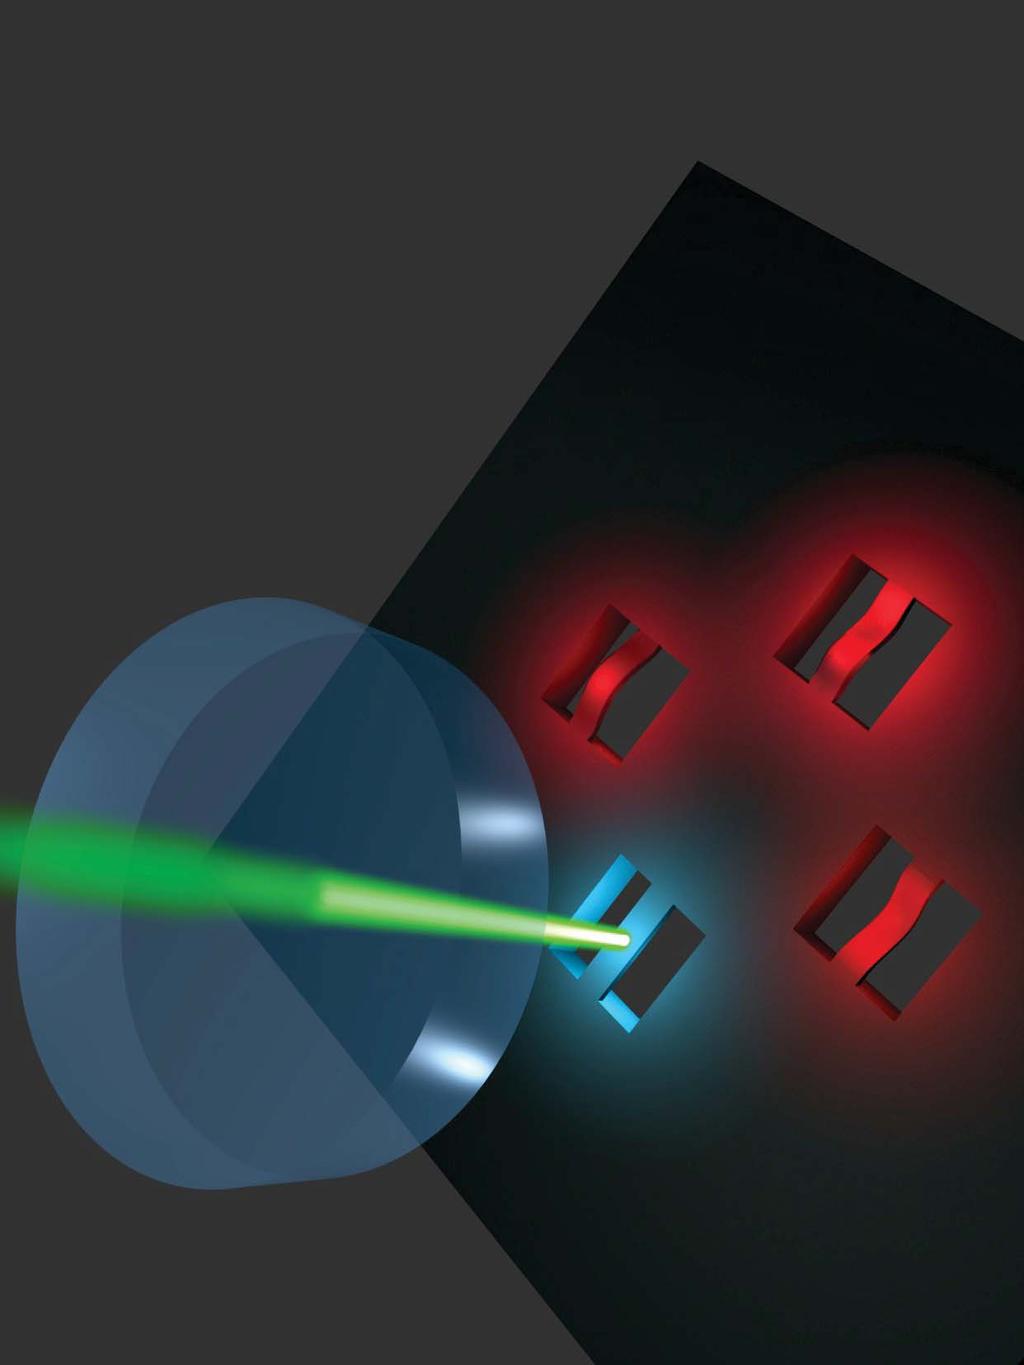 Optomechanics with micro and nano-mirrors